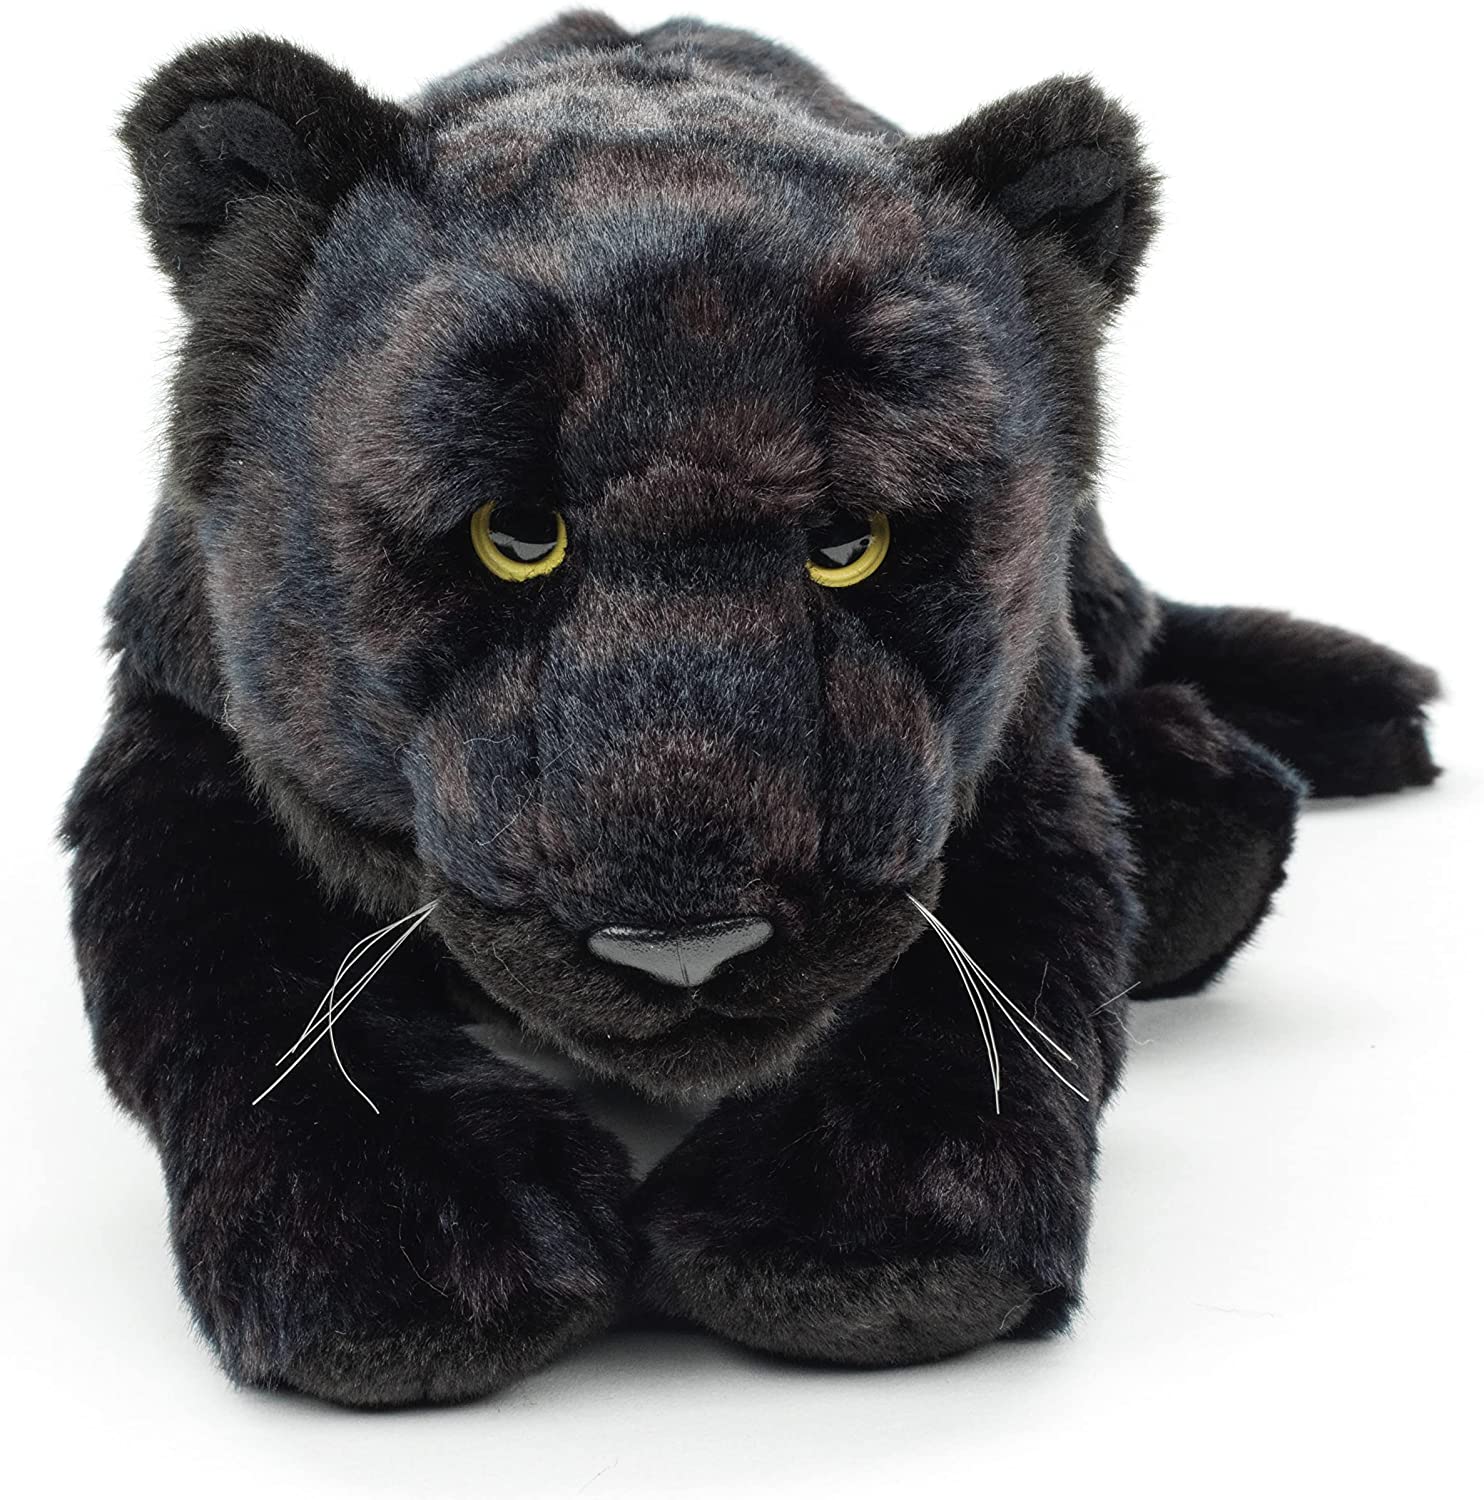 Black panther, lying - 44 cm (length)